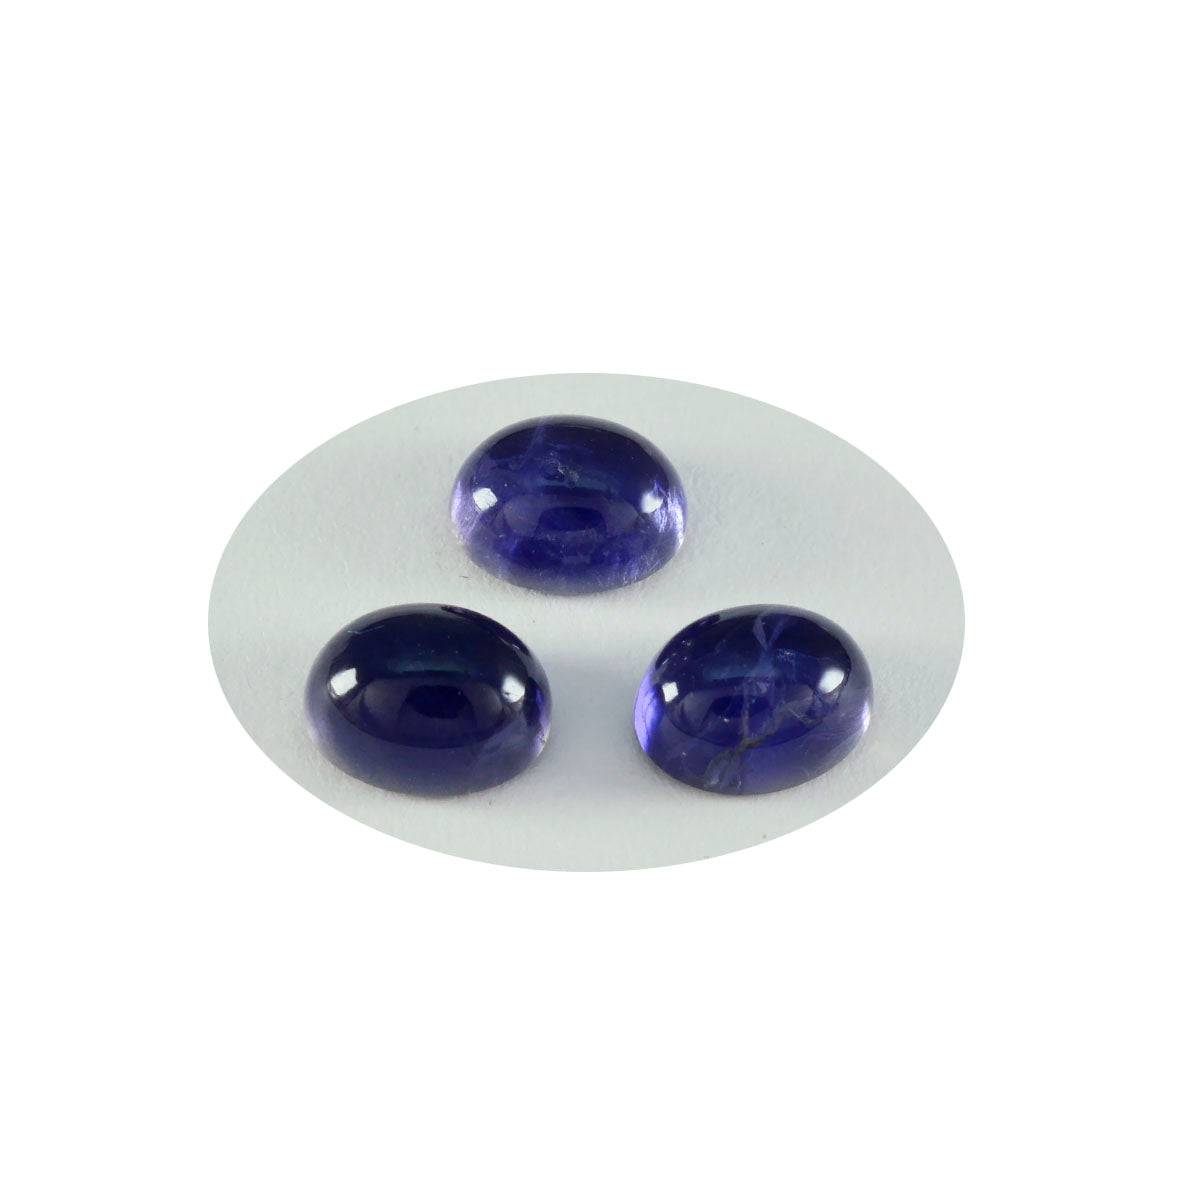 Riyogems 1PC blauwe ioliet cabochon 10x12 mm ovale vorm knappe kwaliteit losse steen